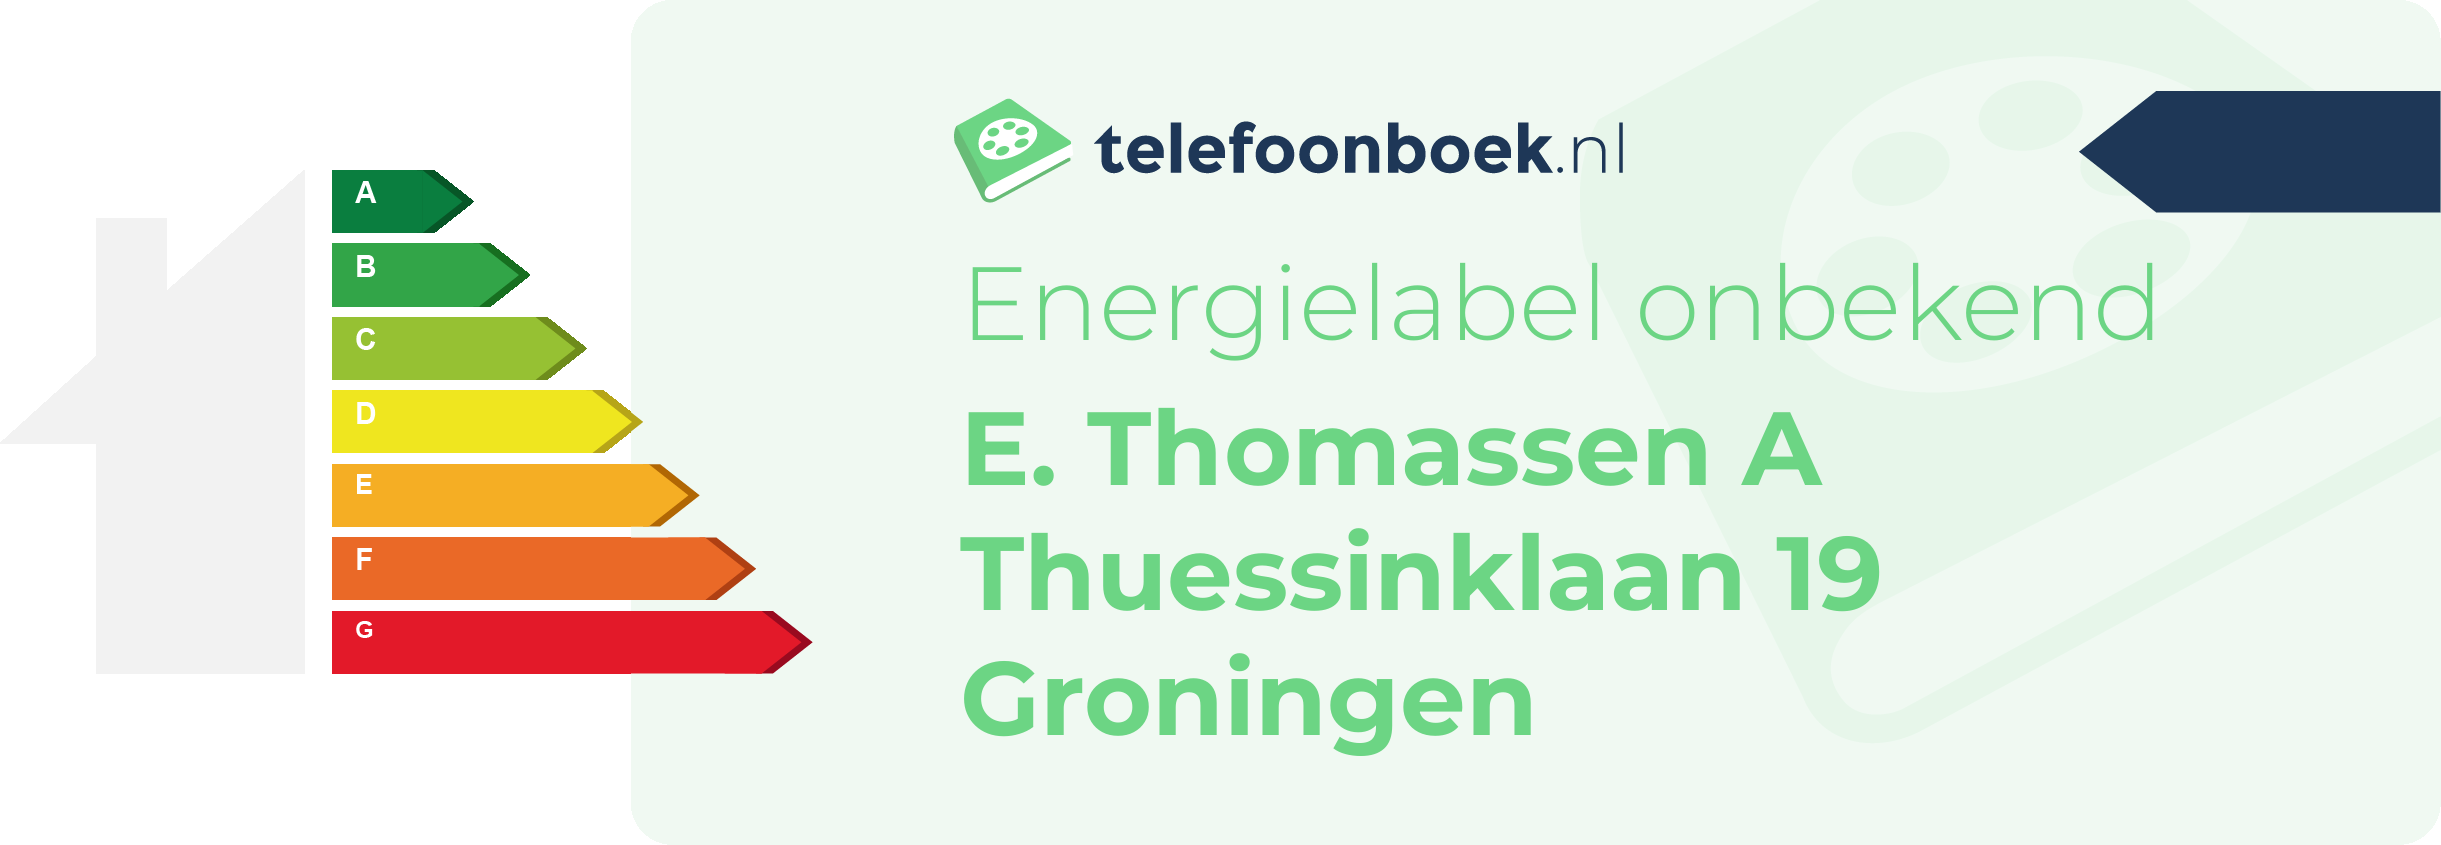 Energielabel E. Thomassen A Thuessinklaan 19 Groningen